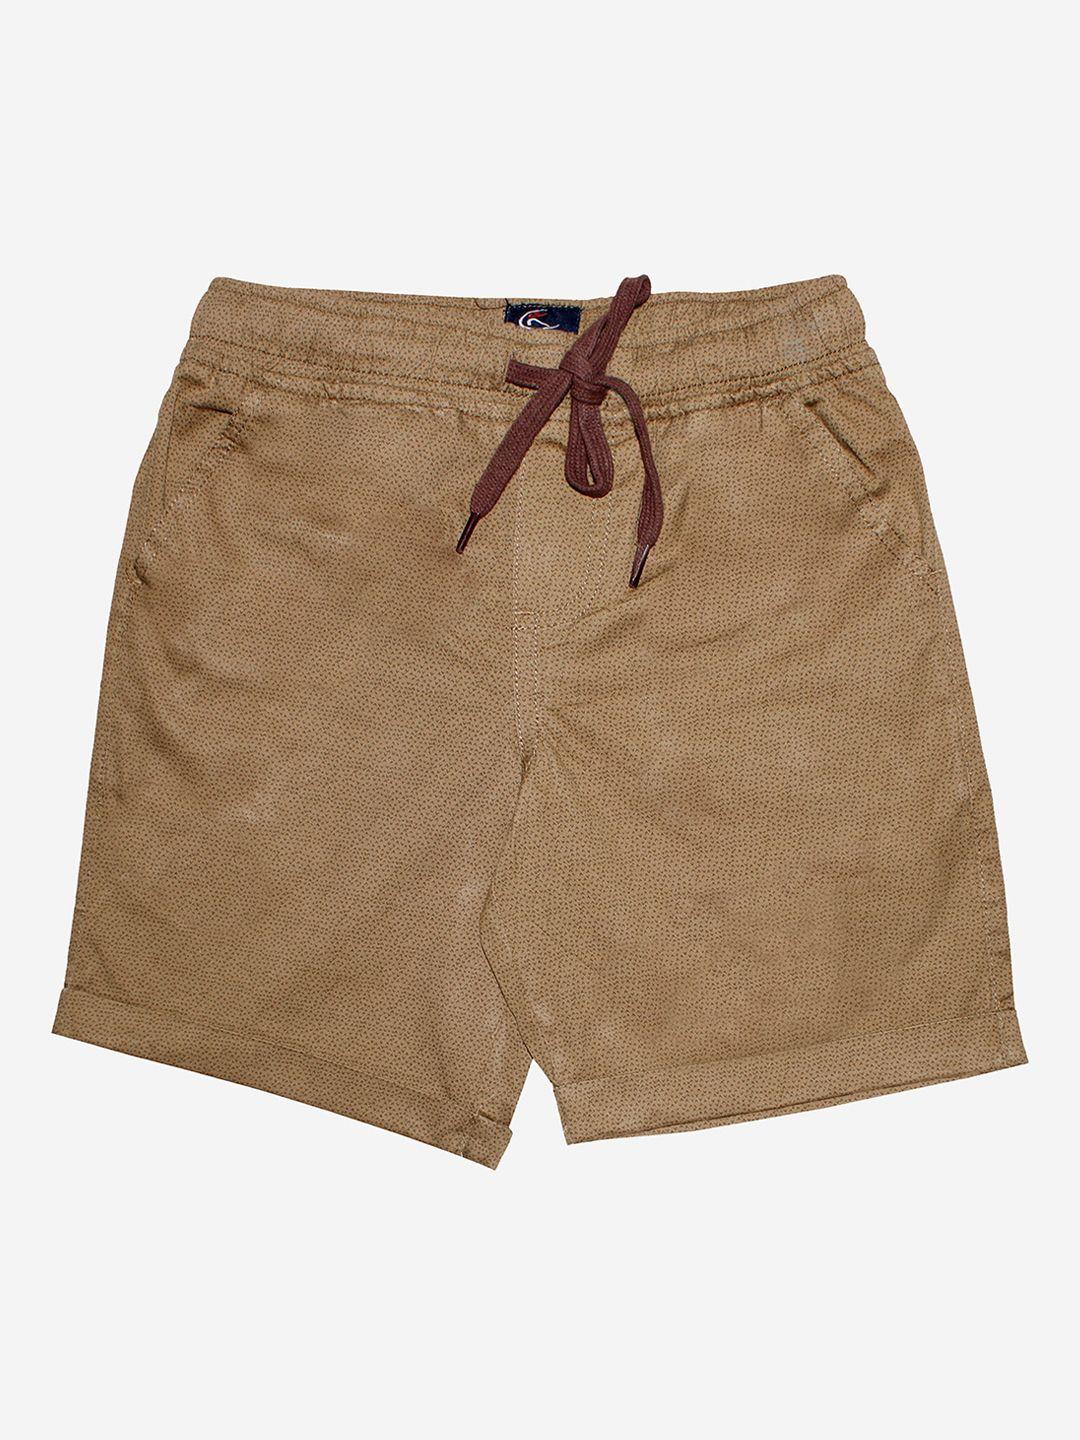 kiddopanti boys khaki solid cotton shorts